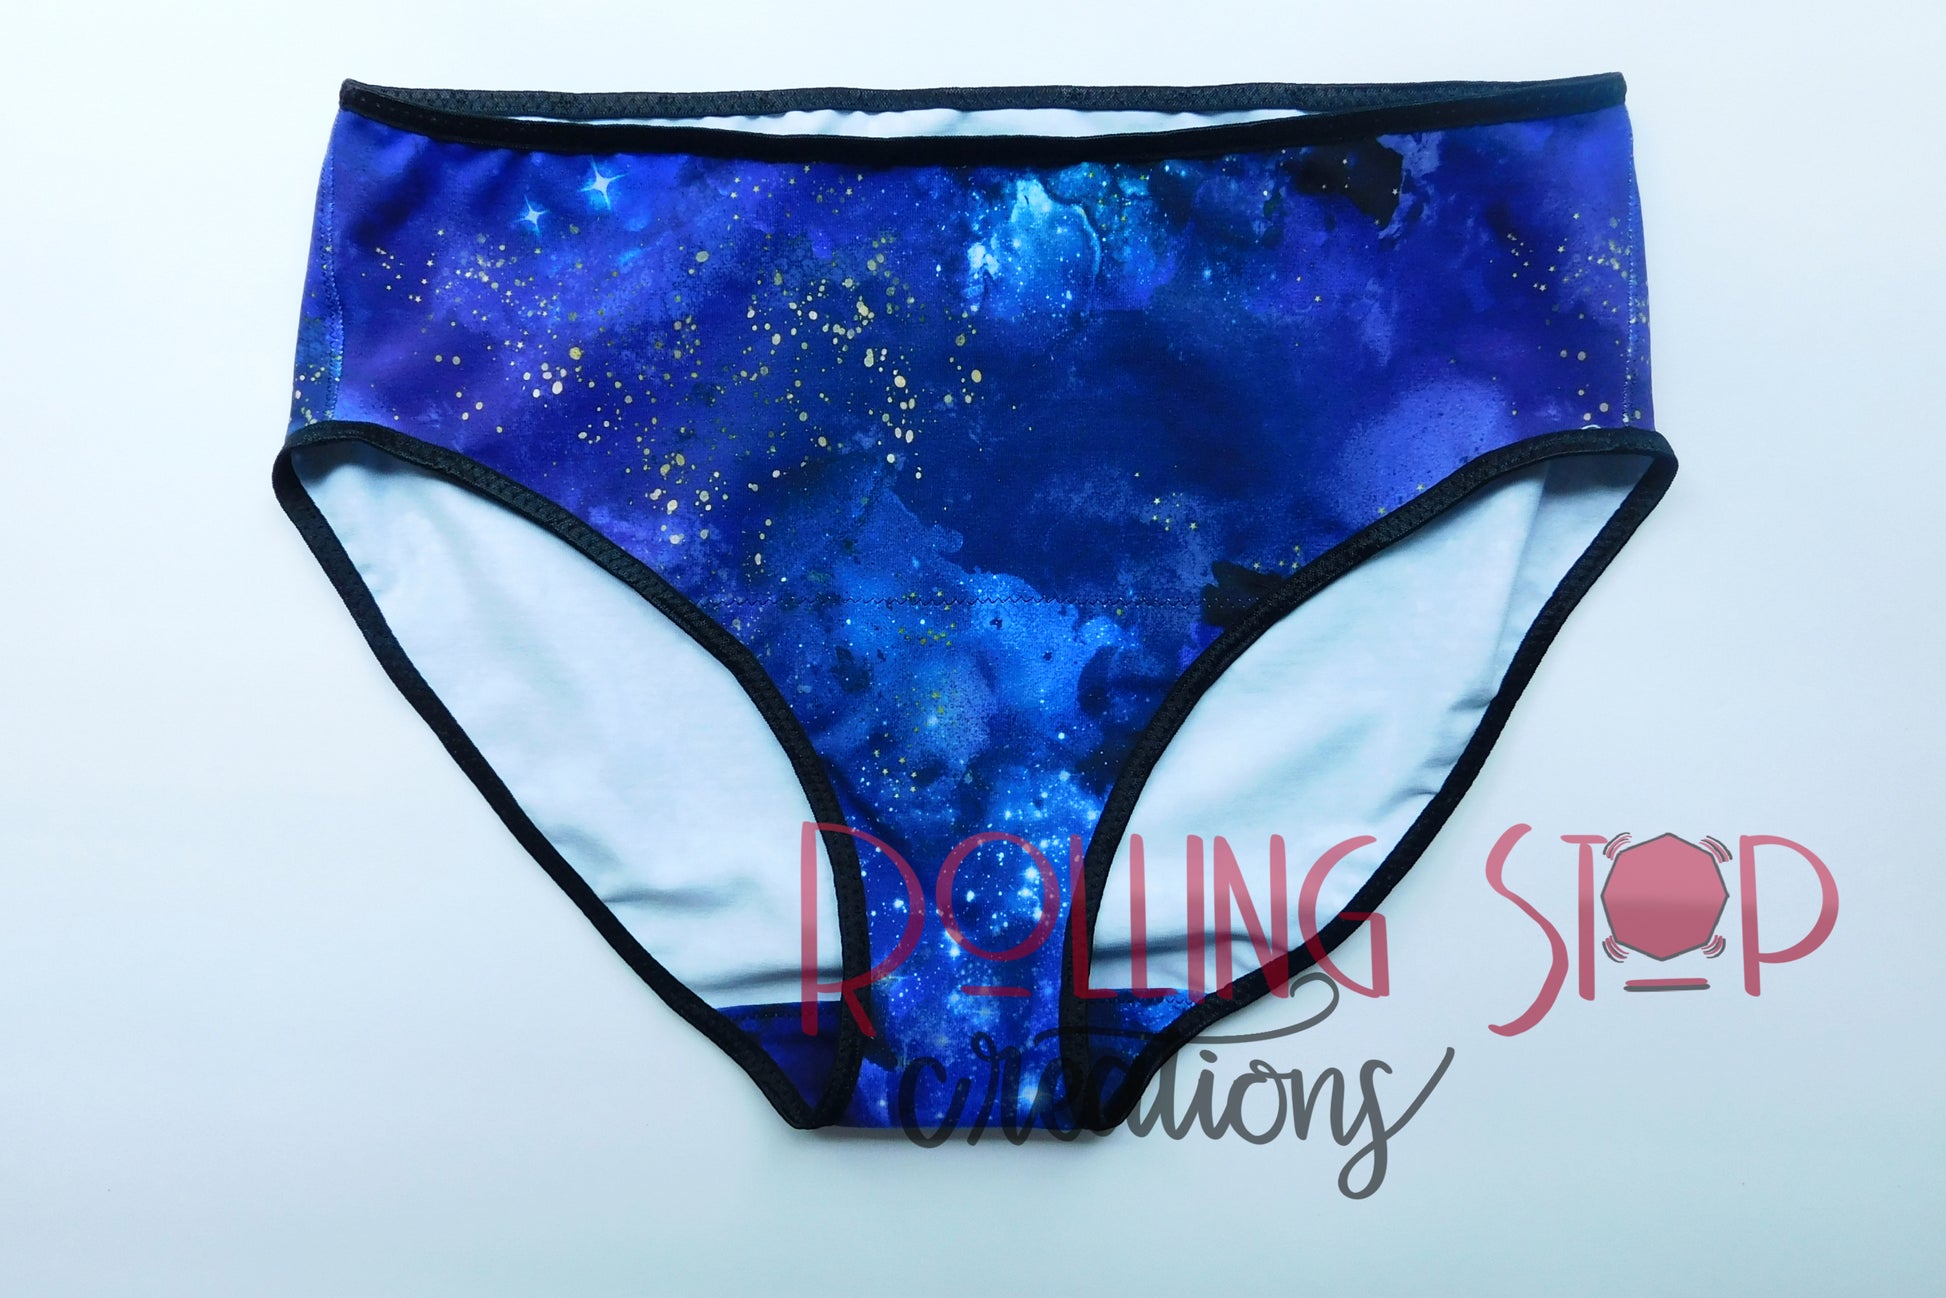 Jantasy Galaxy Lace Back Pantydrawls by Rolling Stop Creations sold by Rolling Stop Creations 